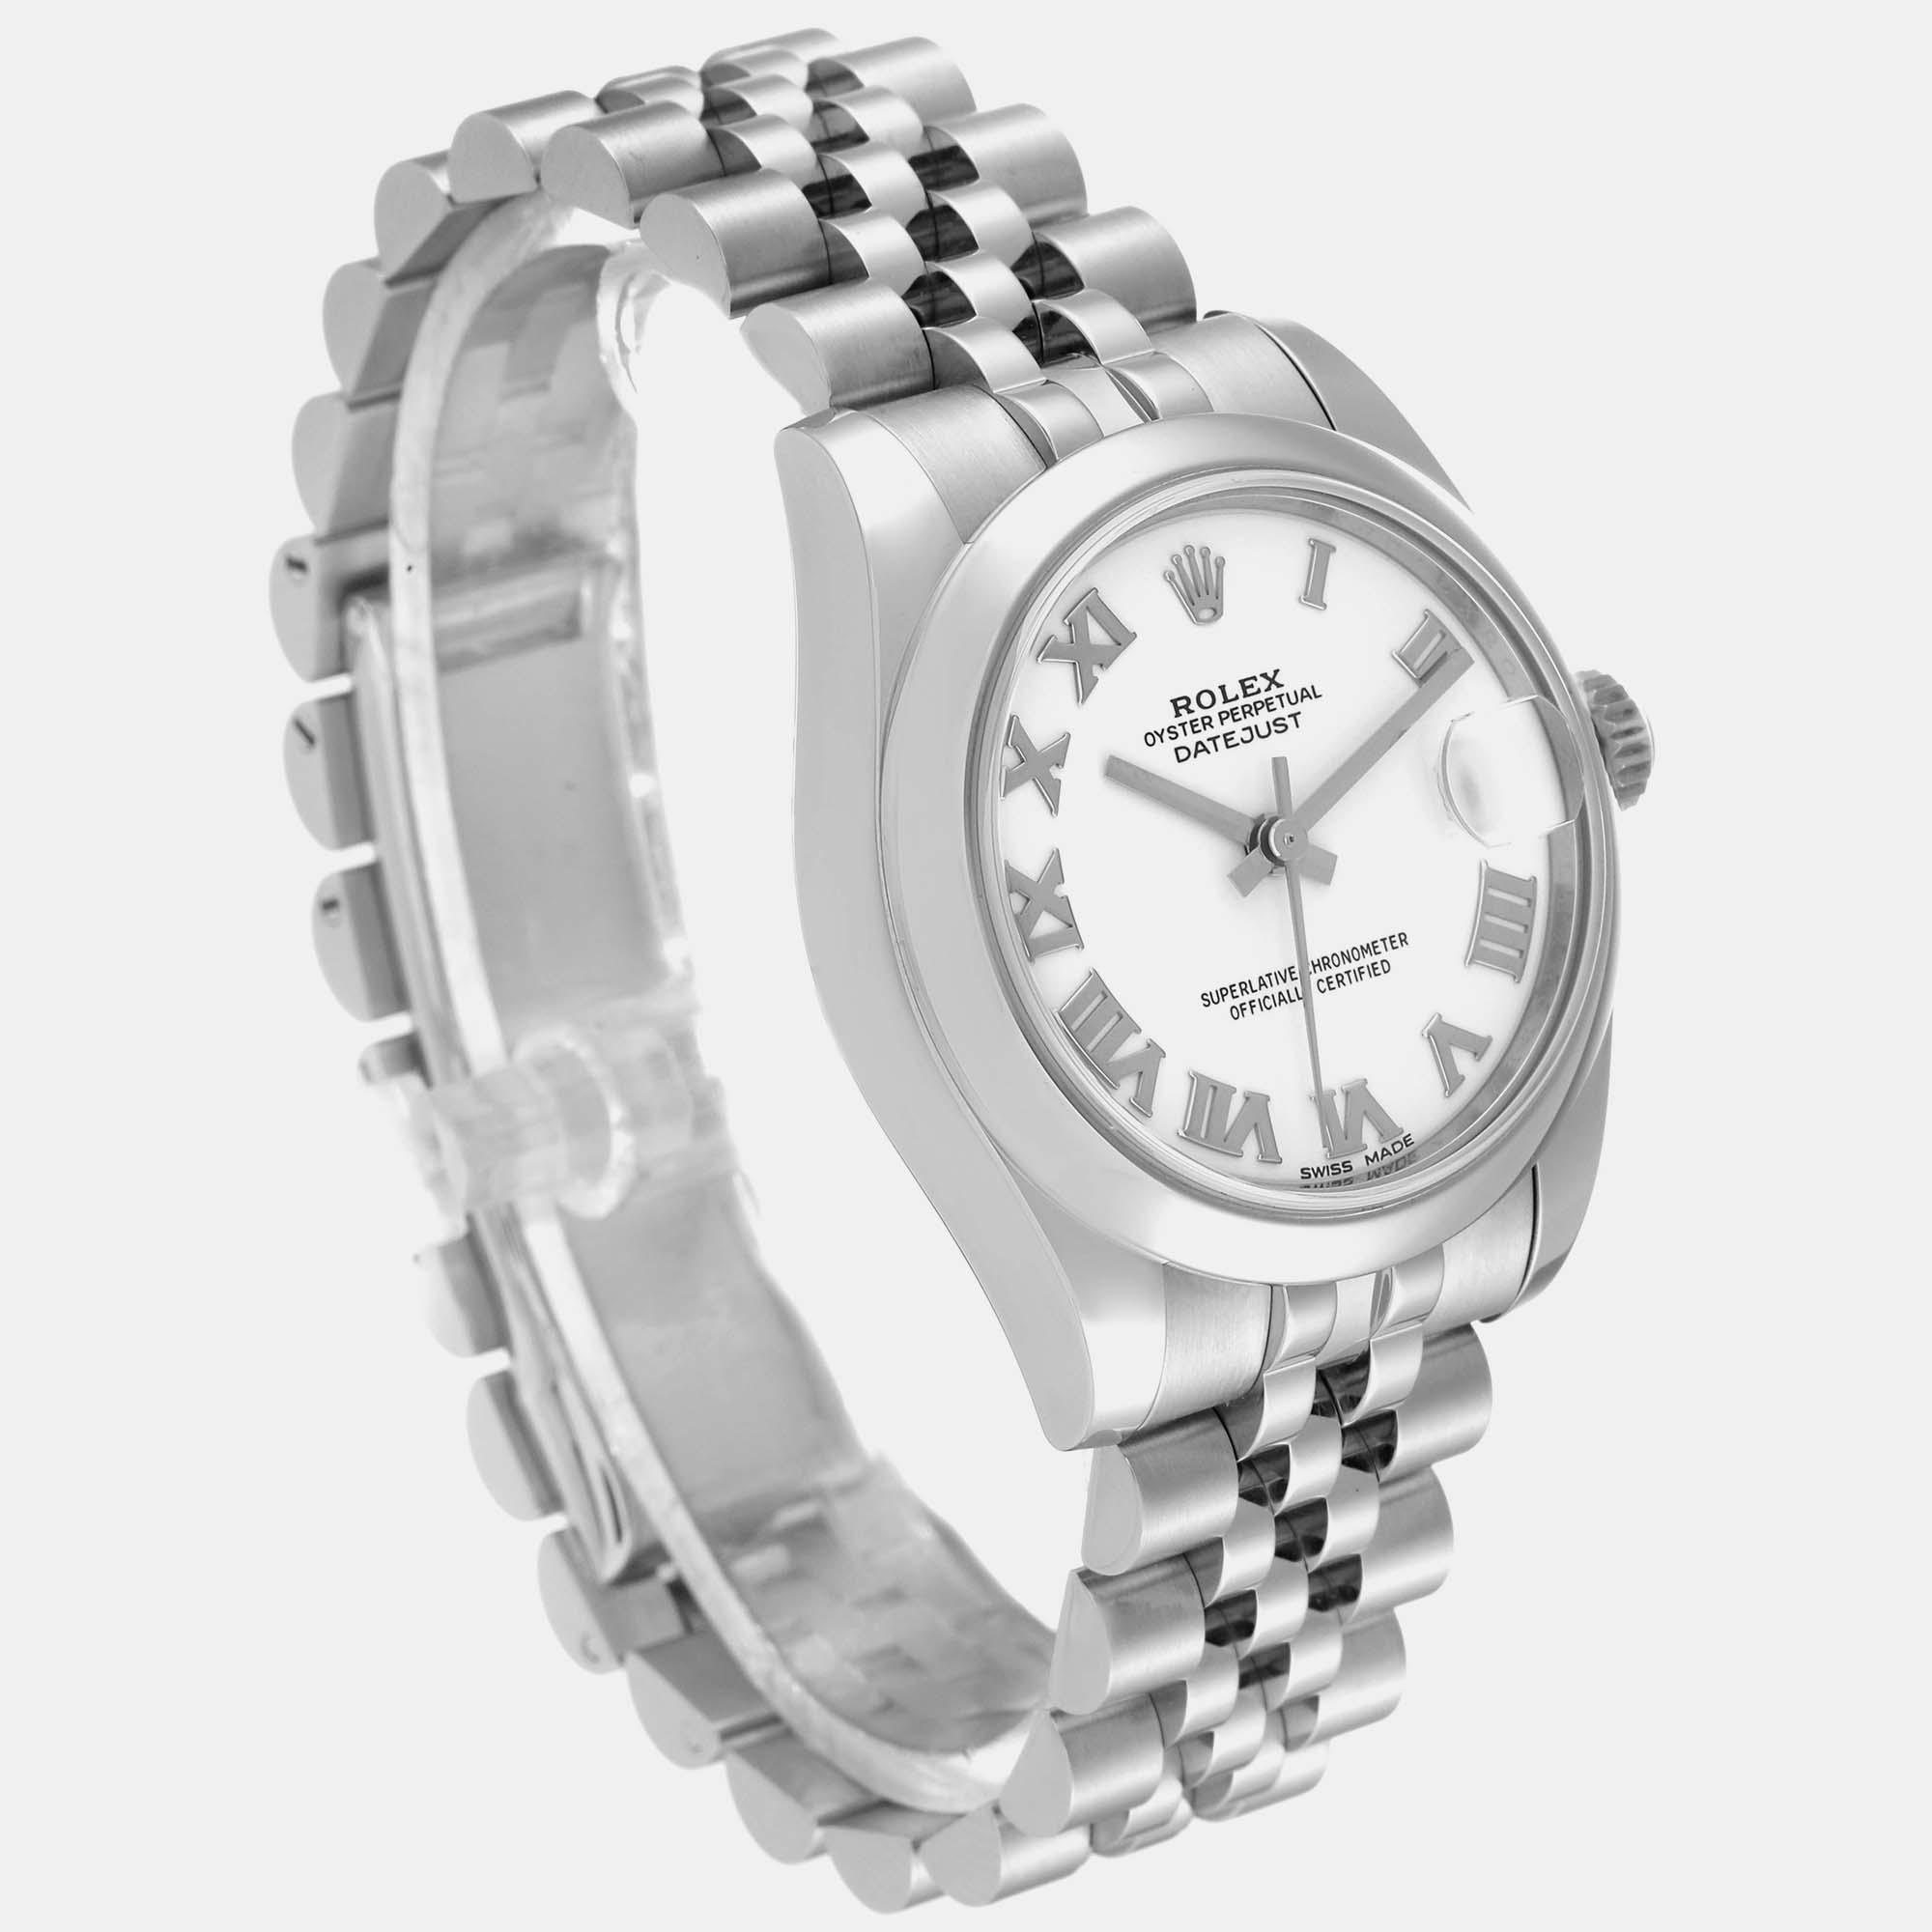 Rolex Datejust Midsize Steel White Roman Dial Ladies Watch 178240 31 Mm